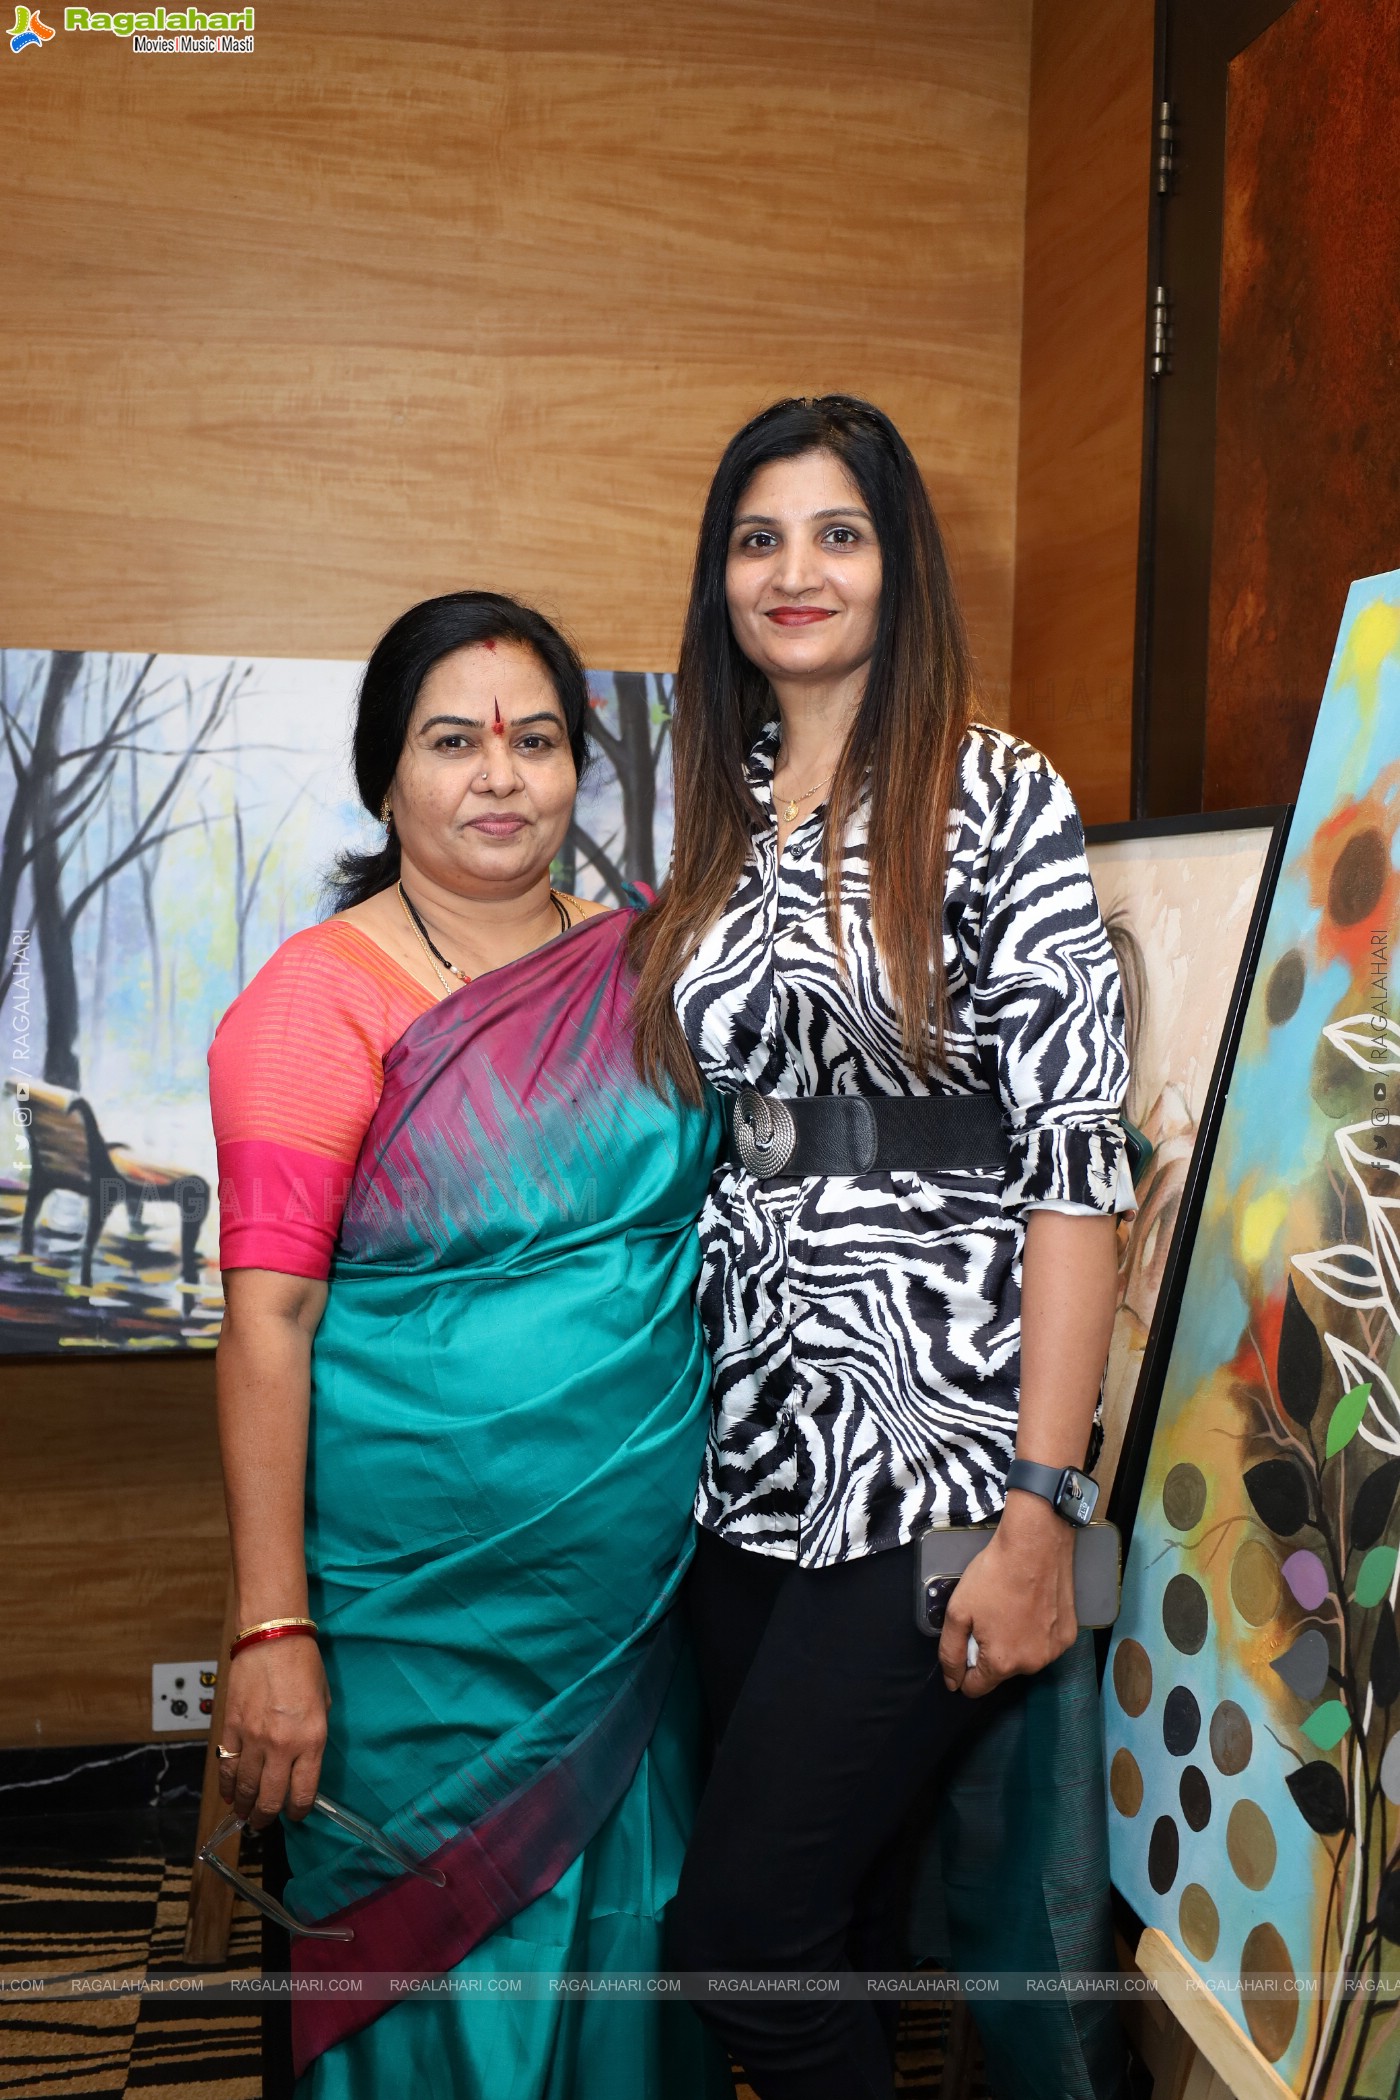 VSL Visual Art Gallery: Mother's Day Celebrations at Vivanta by Taj, Begampet